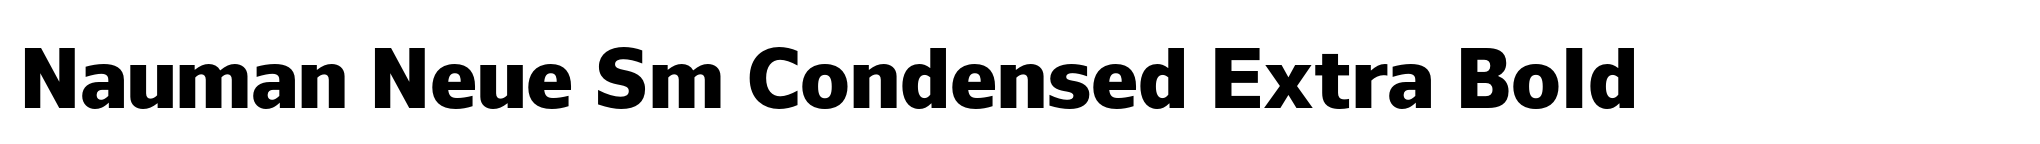 Nauman Neue Sm Condensed Extra Bold image